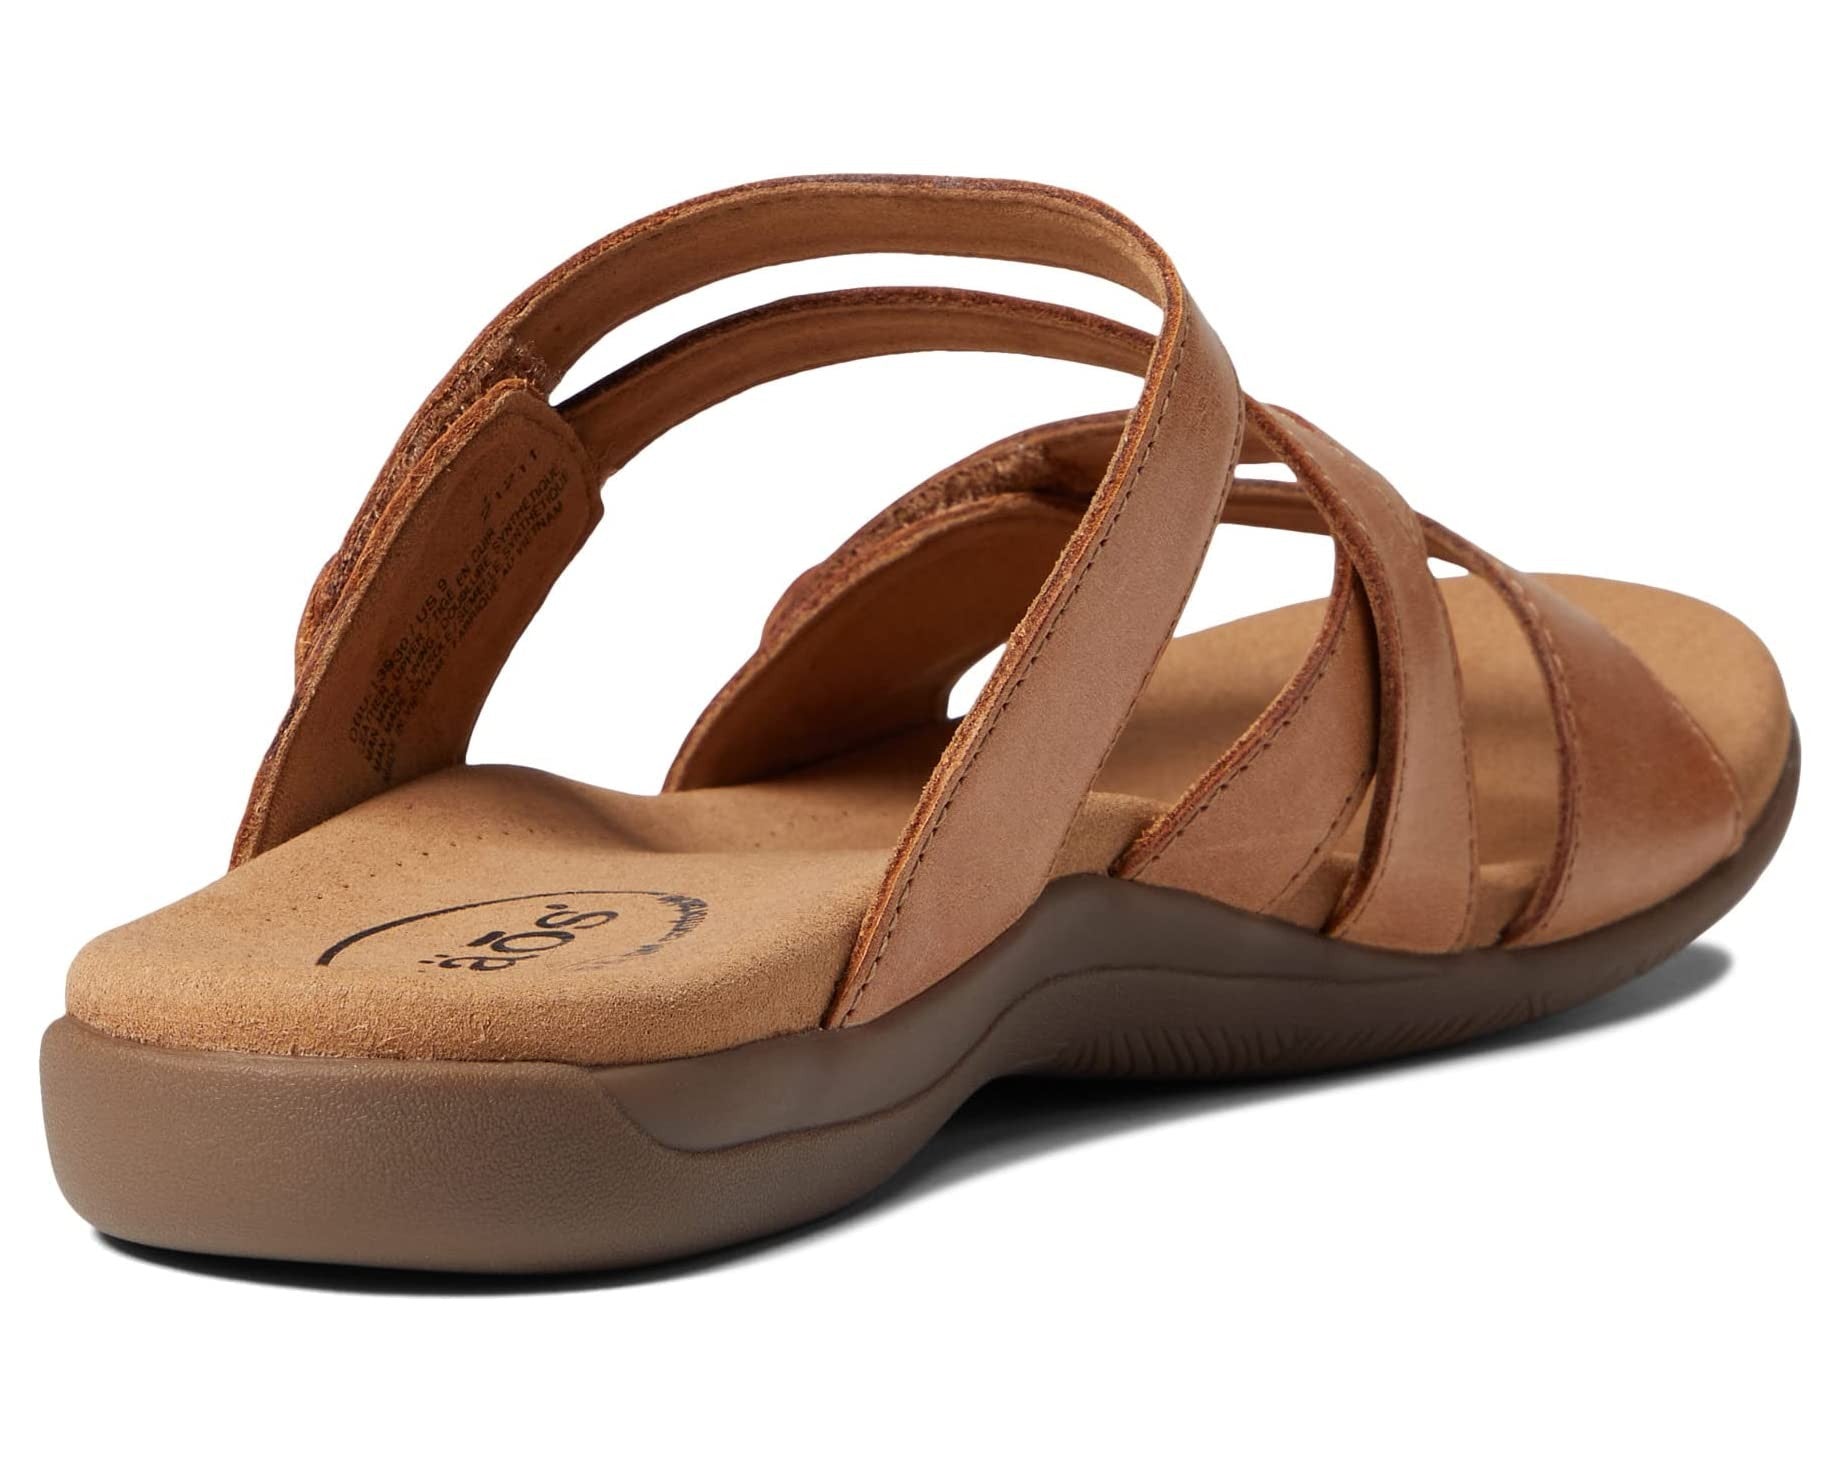 Double U | Leather | Caramel - Sandals - Taos